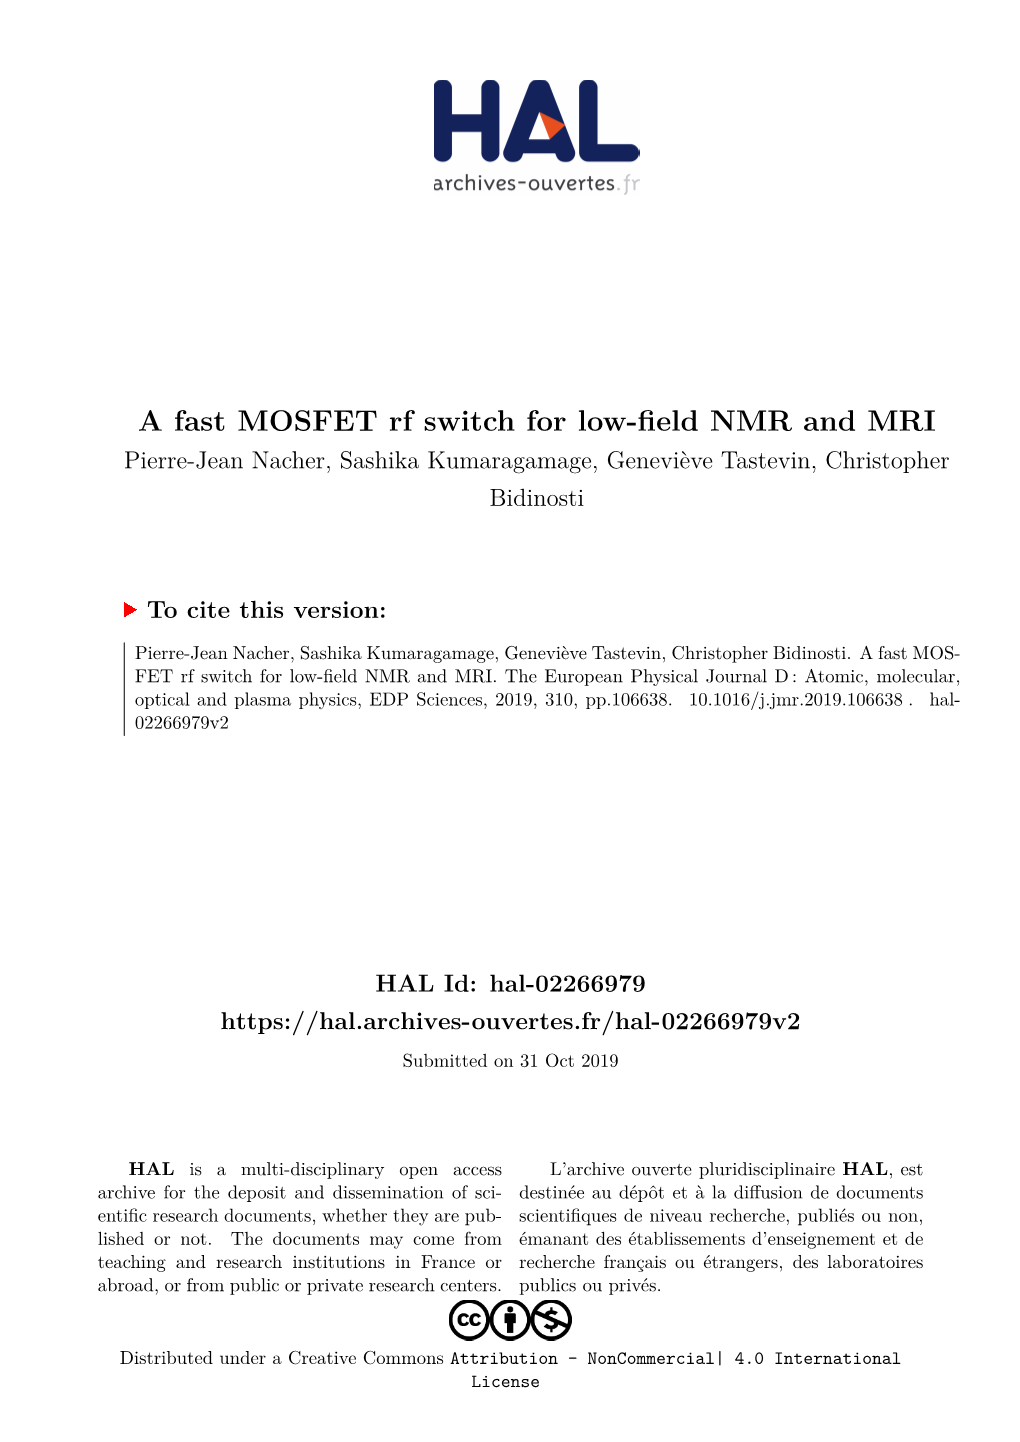 A Fast MOSFET Rf Switch for Low-Field NMR and MRI Pierre-Jean Nacher, Sashika Kumaragamage, Geneviève Tastevin, Christopher Bidinosti